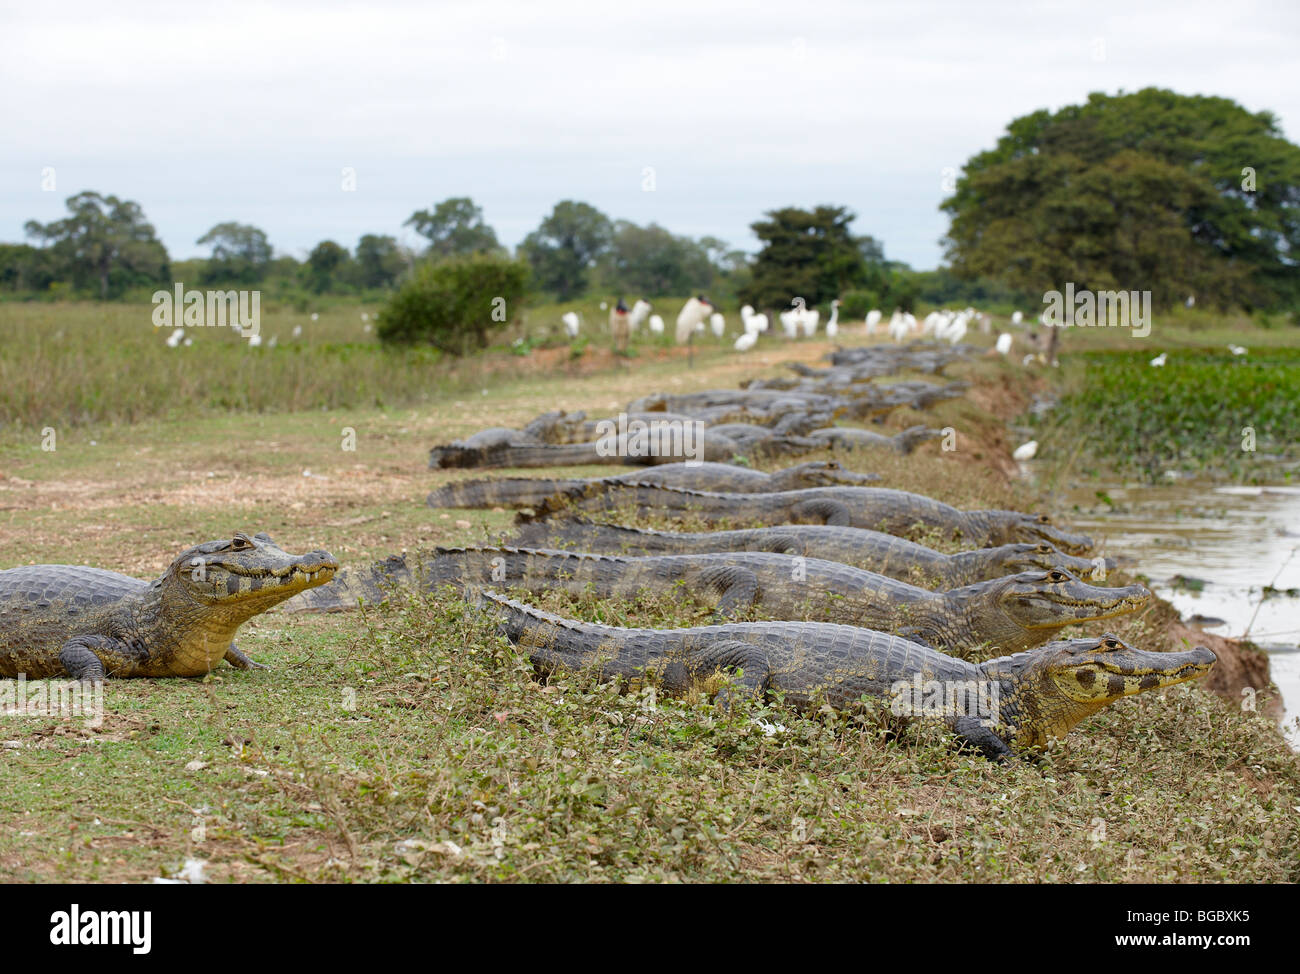 huge group of yacare caimans, Pantanal, MATO GROSSO, Brasil, South America Stock Photo